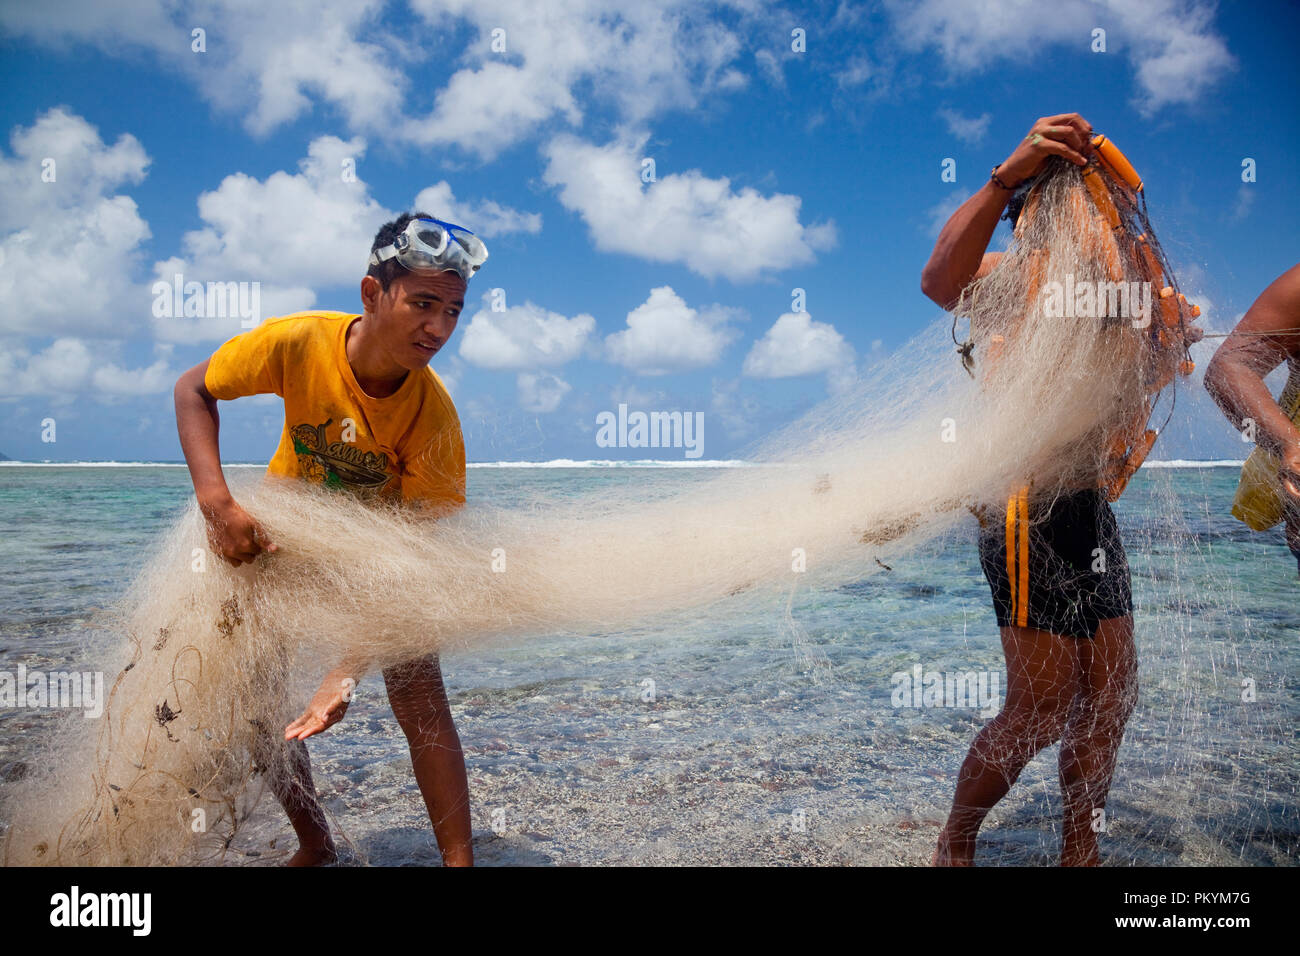 Locals prepare a fishing net to catch fish in the lagoon at Lepa Beach, Samoa. Stock Photo